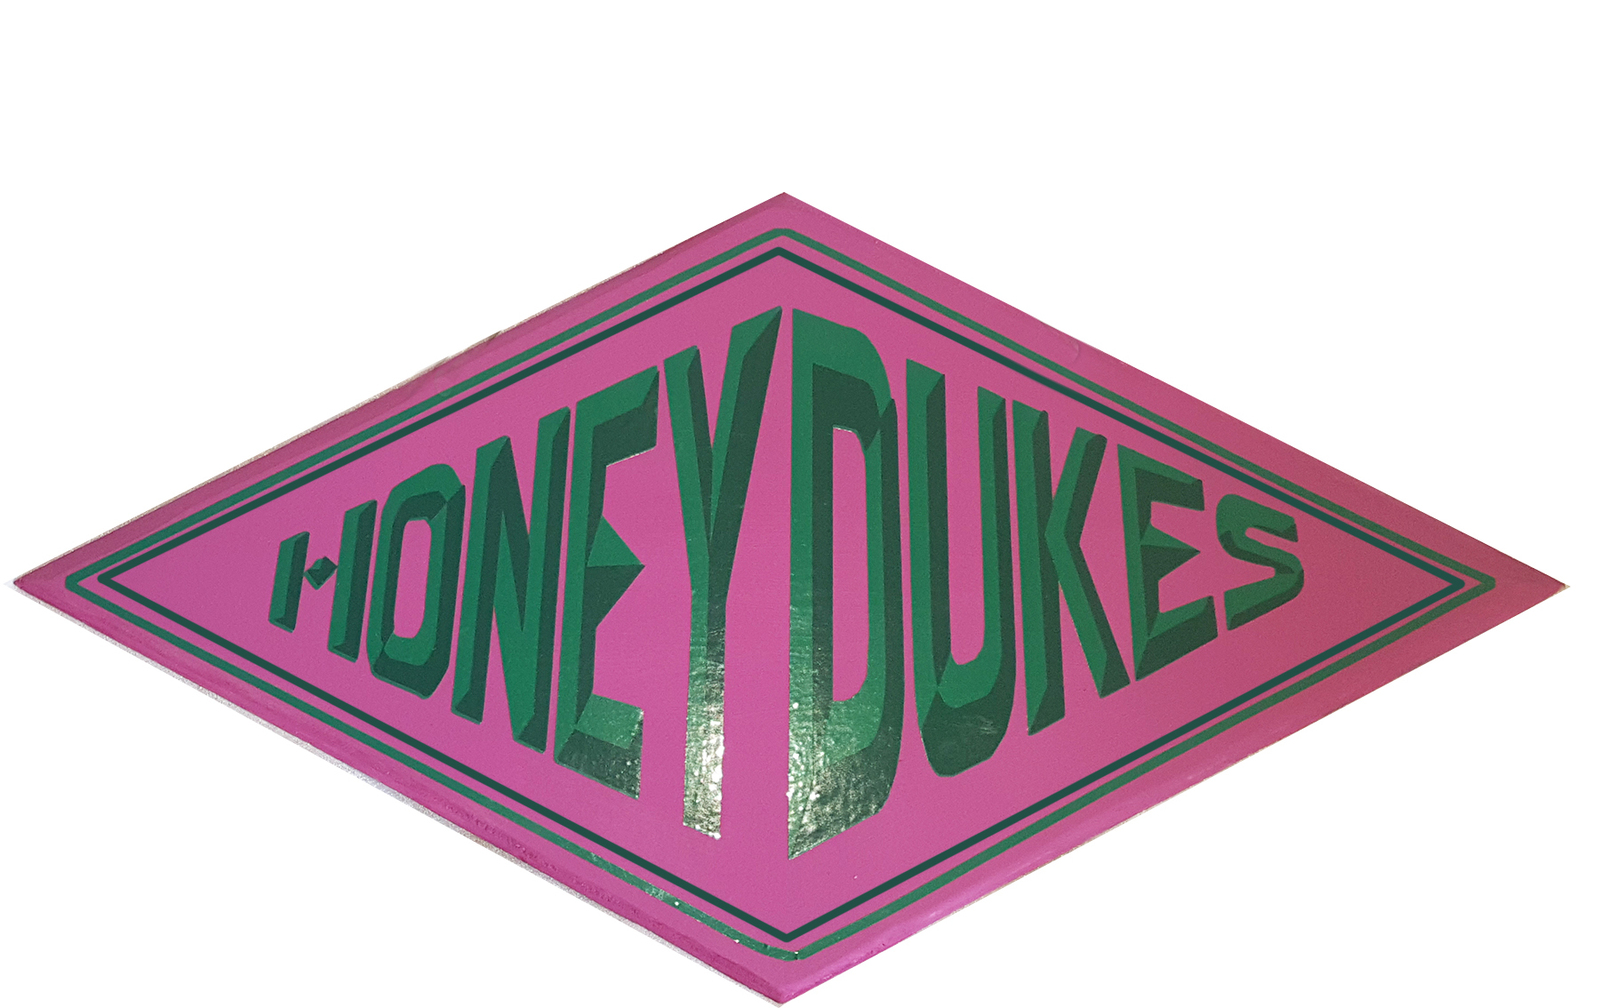 Honeydukes Candy Shop Wood Sign